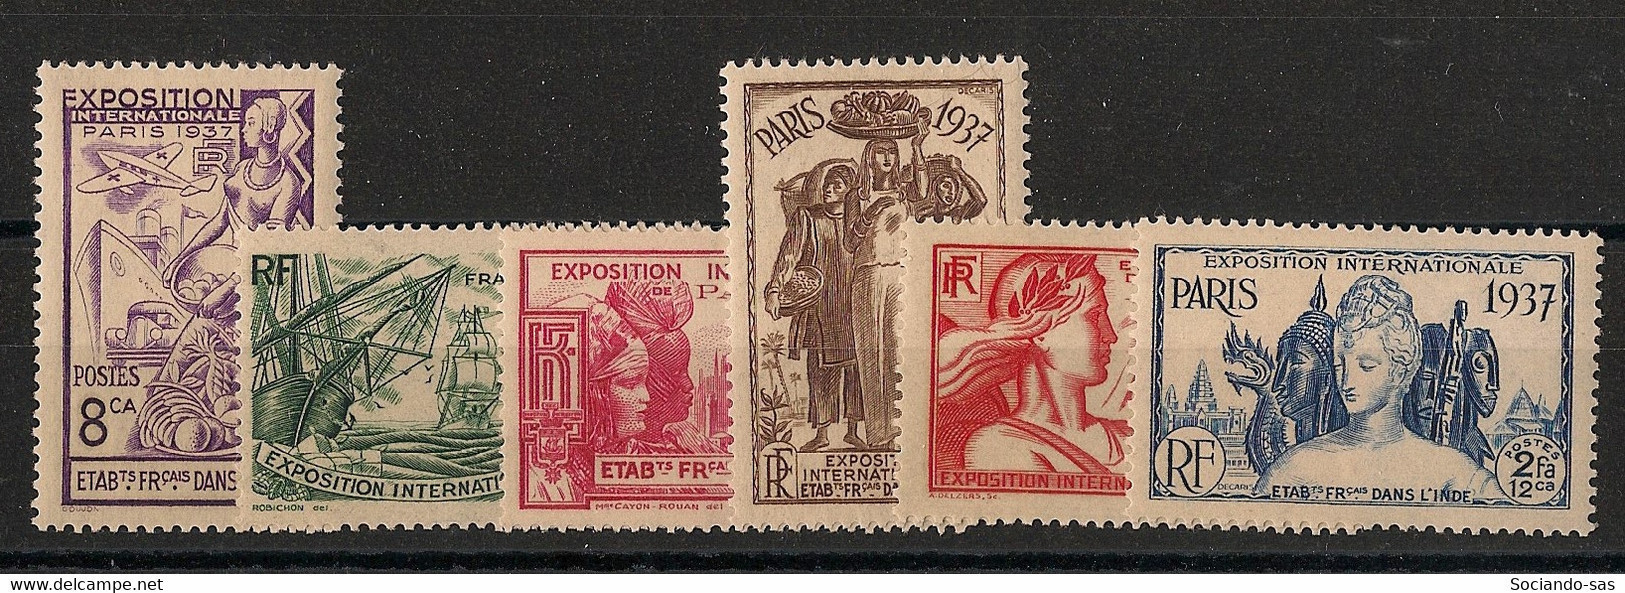 INDE - 1937 - N°YT. 109 à 114 - Série Complète - Exposition Internationale - Neuf Luxe ** / MNH / Postfrisch - Ungebraucht